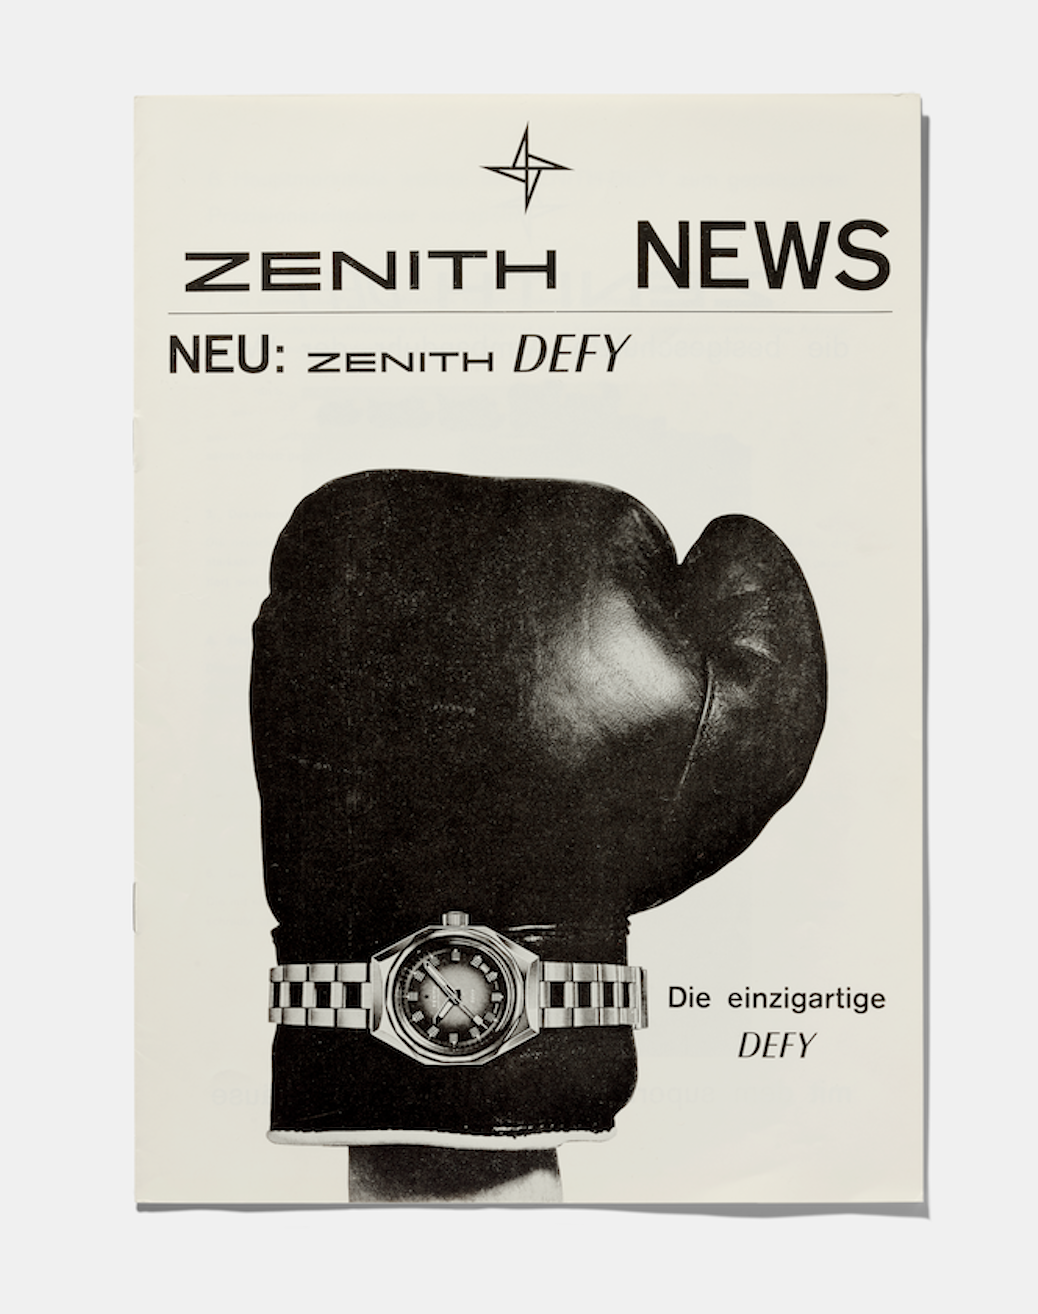 Zenith Defy News